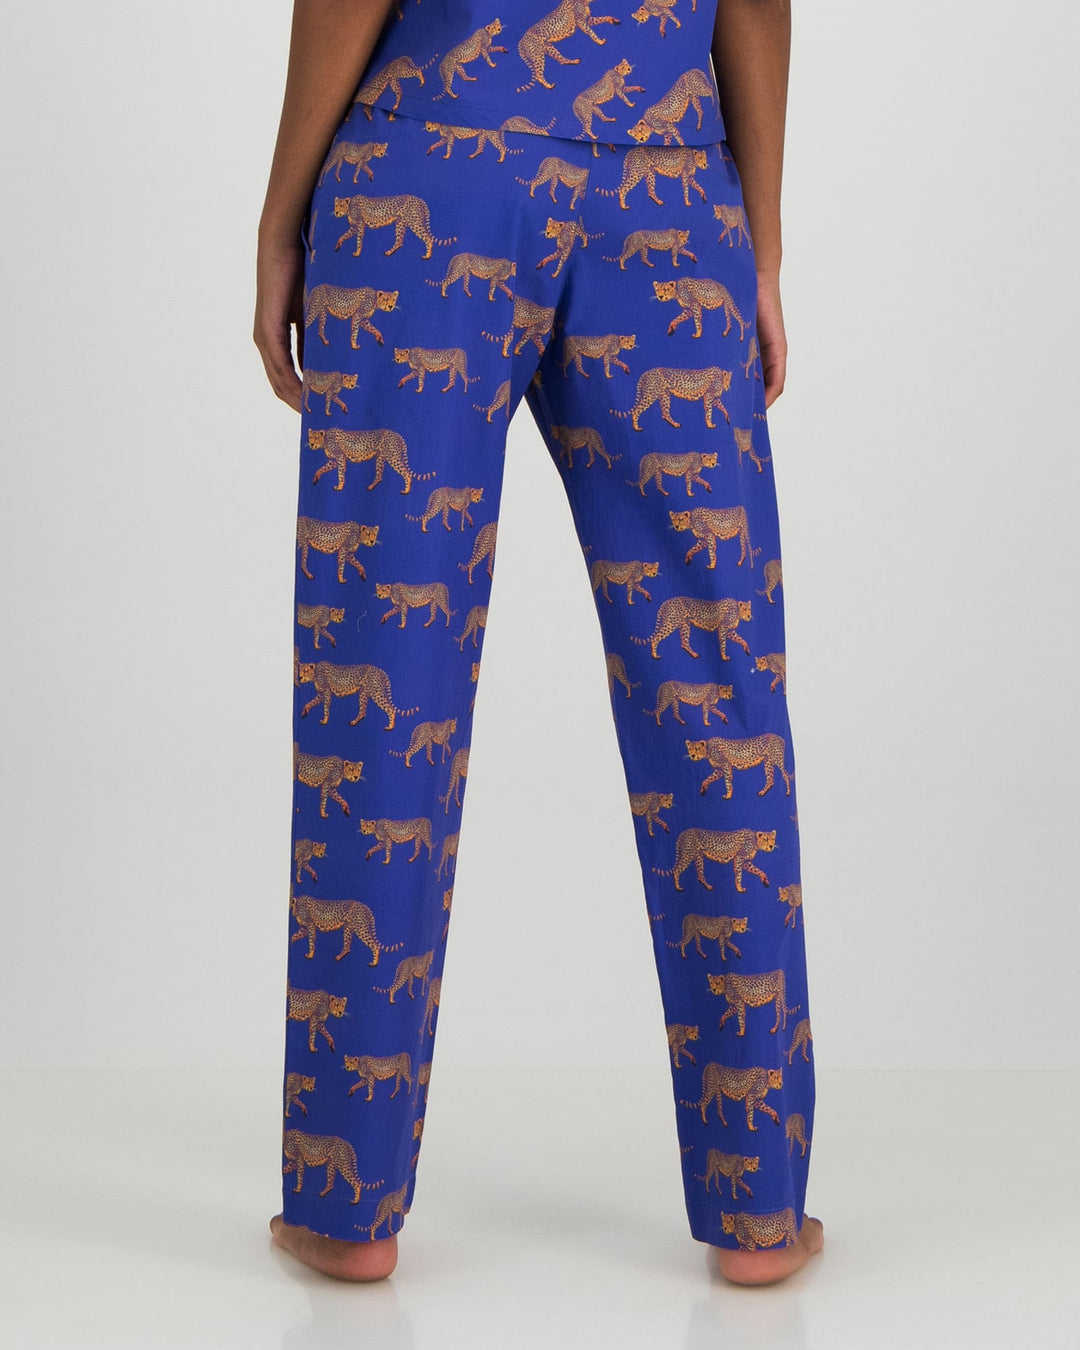 Blue womens lounge pants with cheetahs